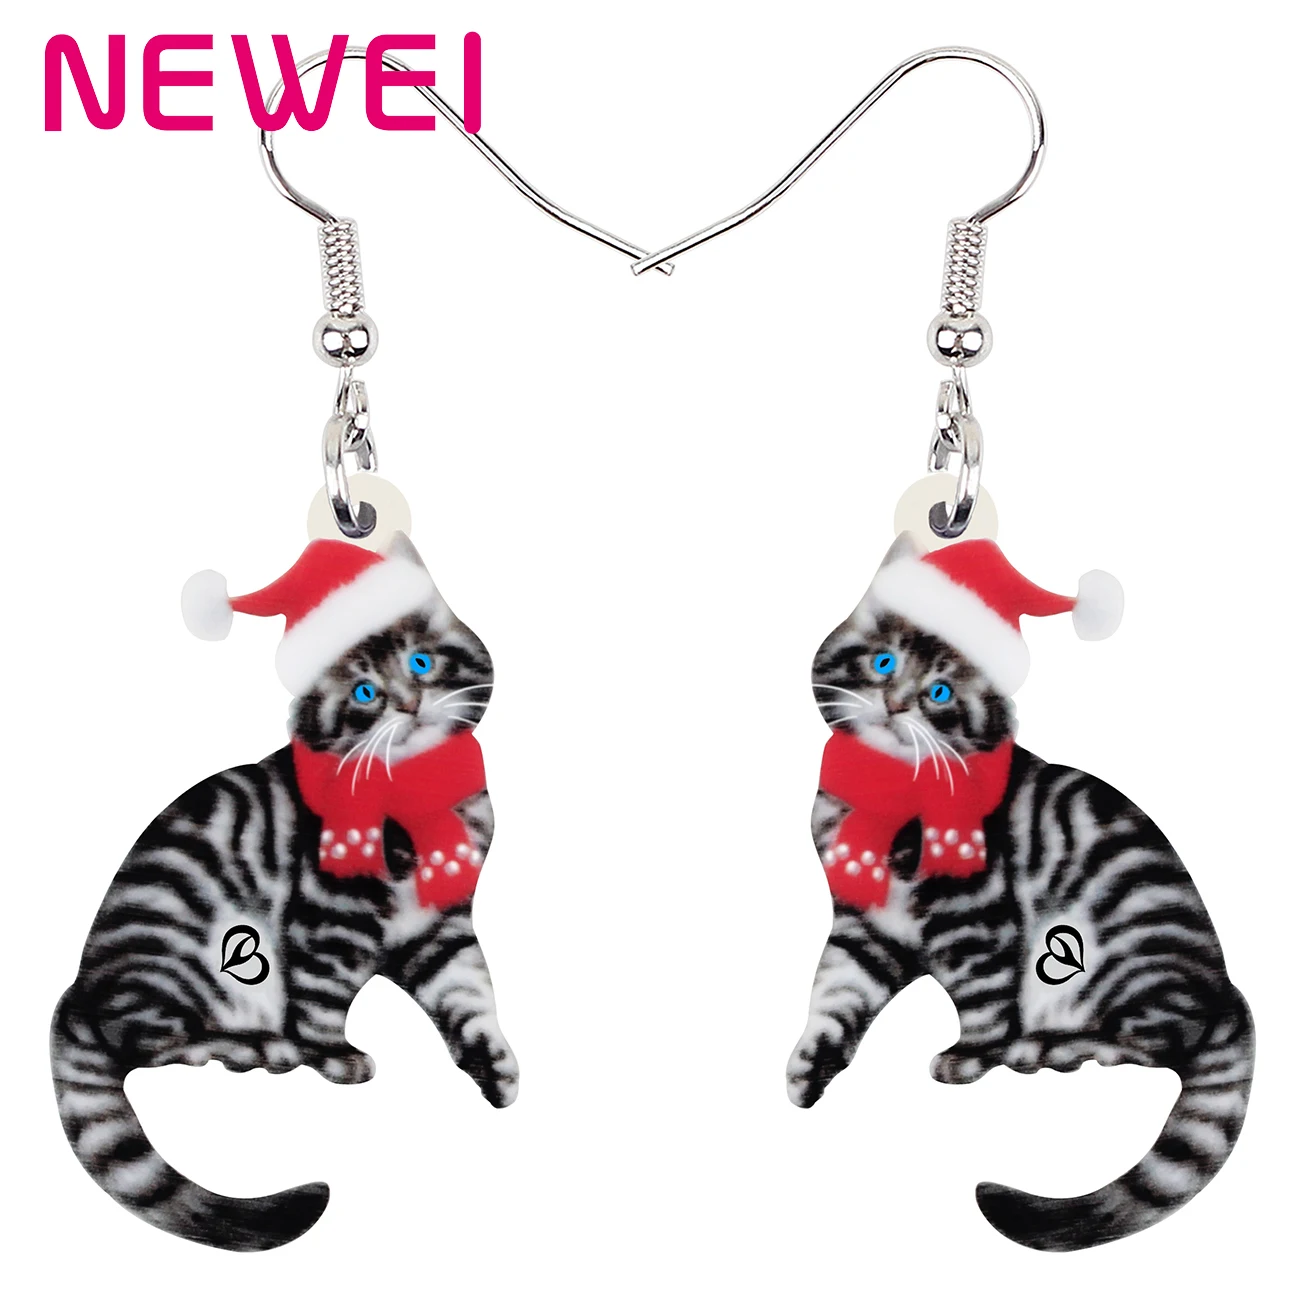 

Acrylic Christmas Cute Red Scarf Hat Kitten Cat Earrings Drop Dangle Trendy Pets Jewelry For Women Girls Teens Party Charm Gifts, Black